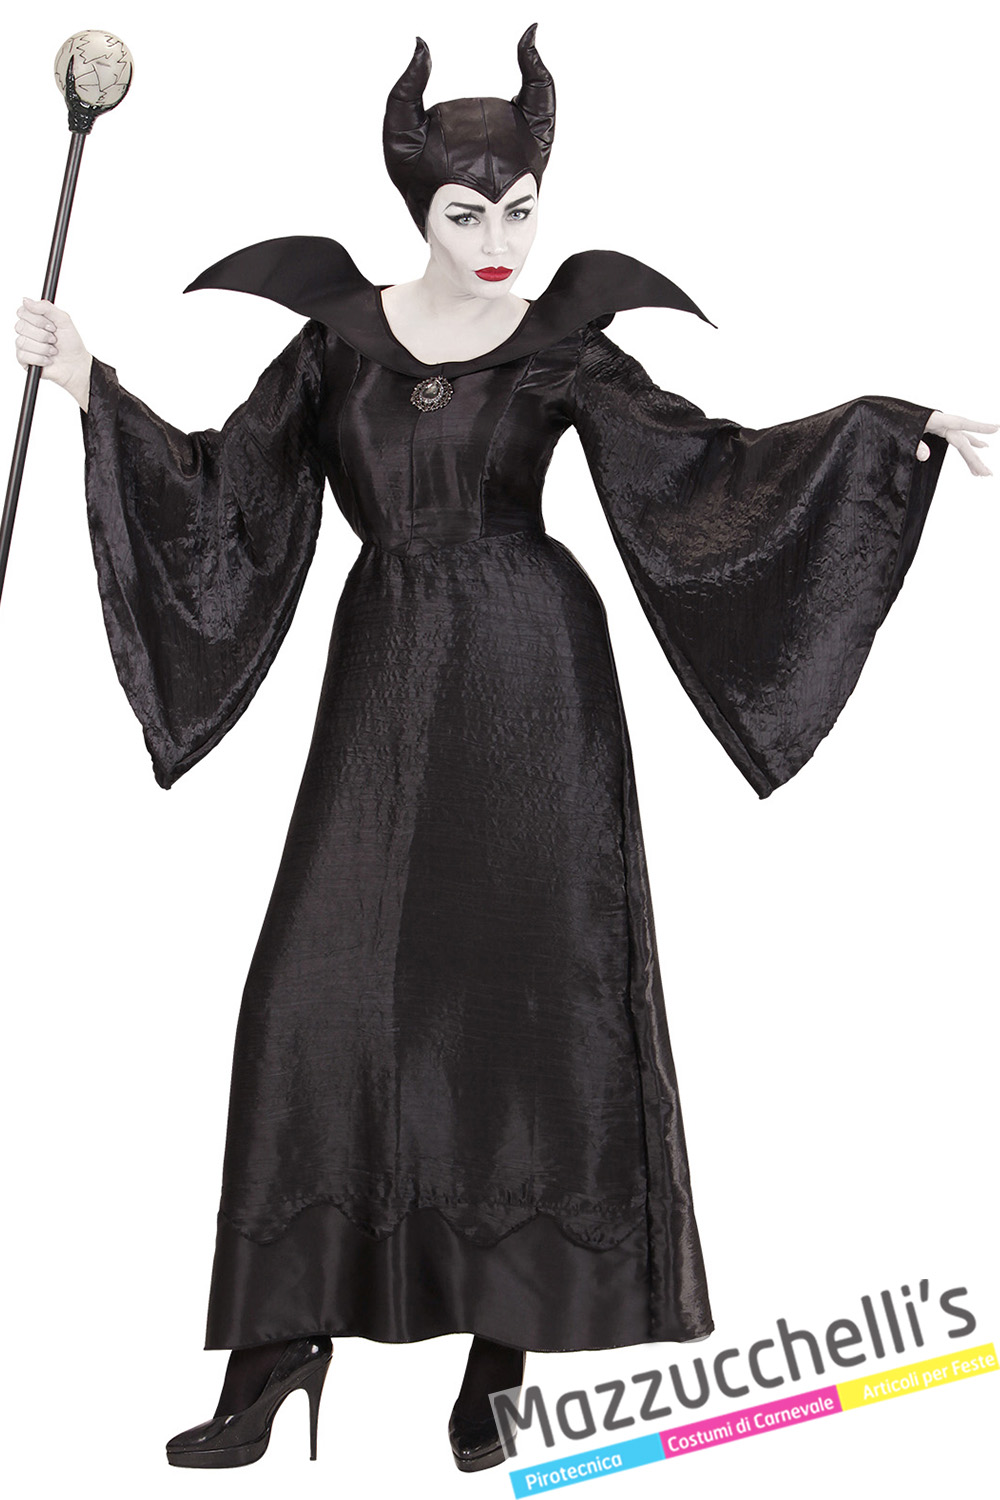 Costume da strega da donna halloween travestimenti carnevale feste taglie varie